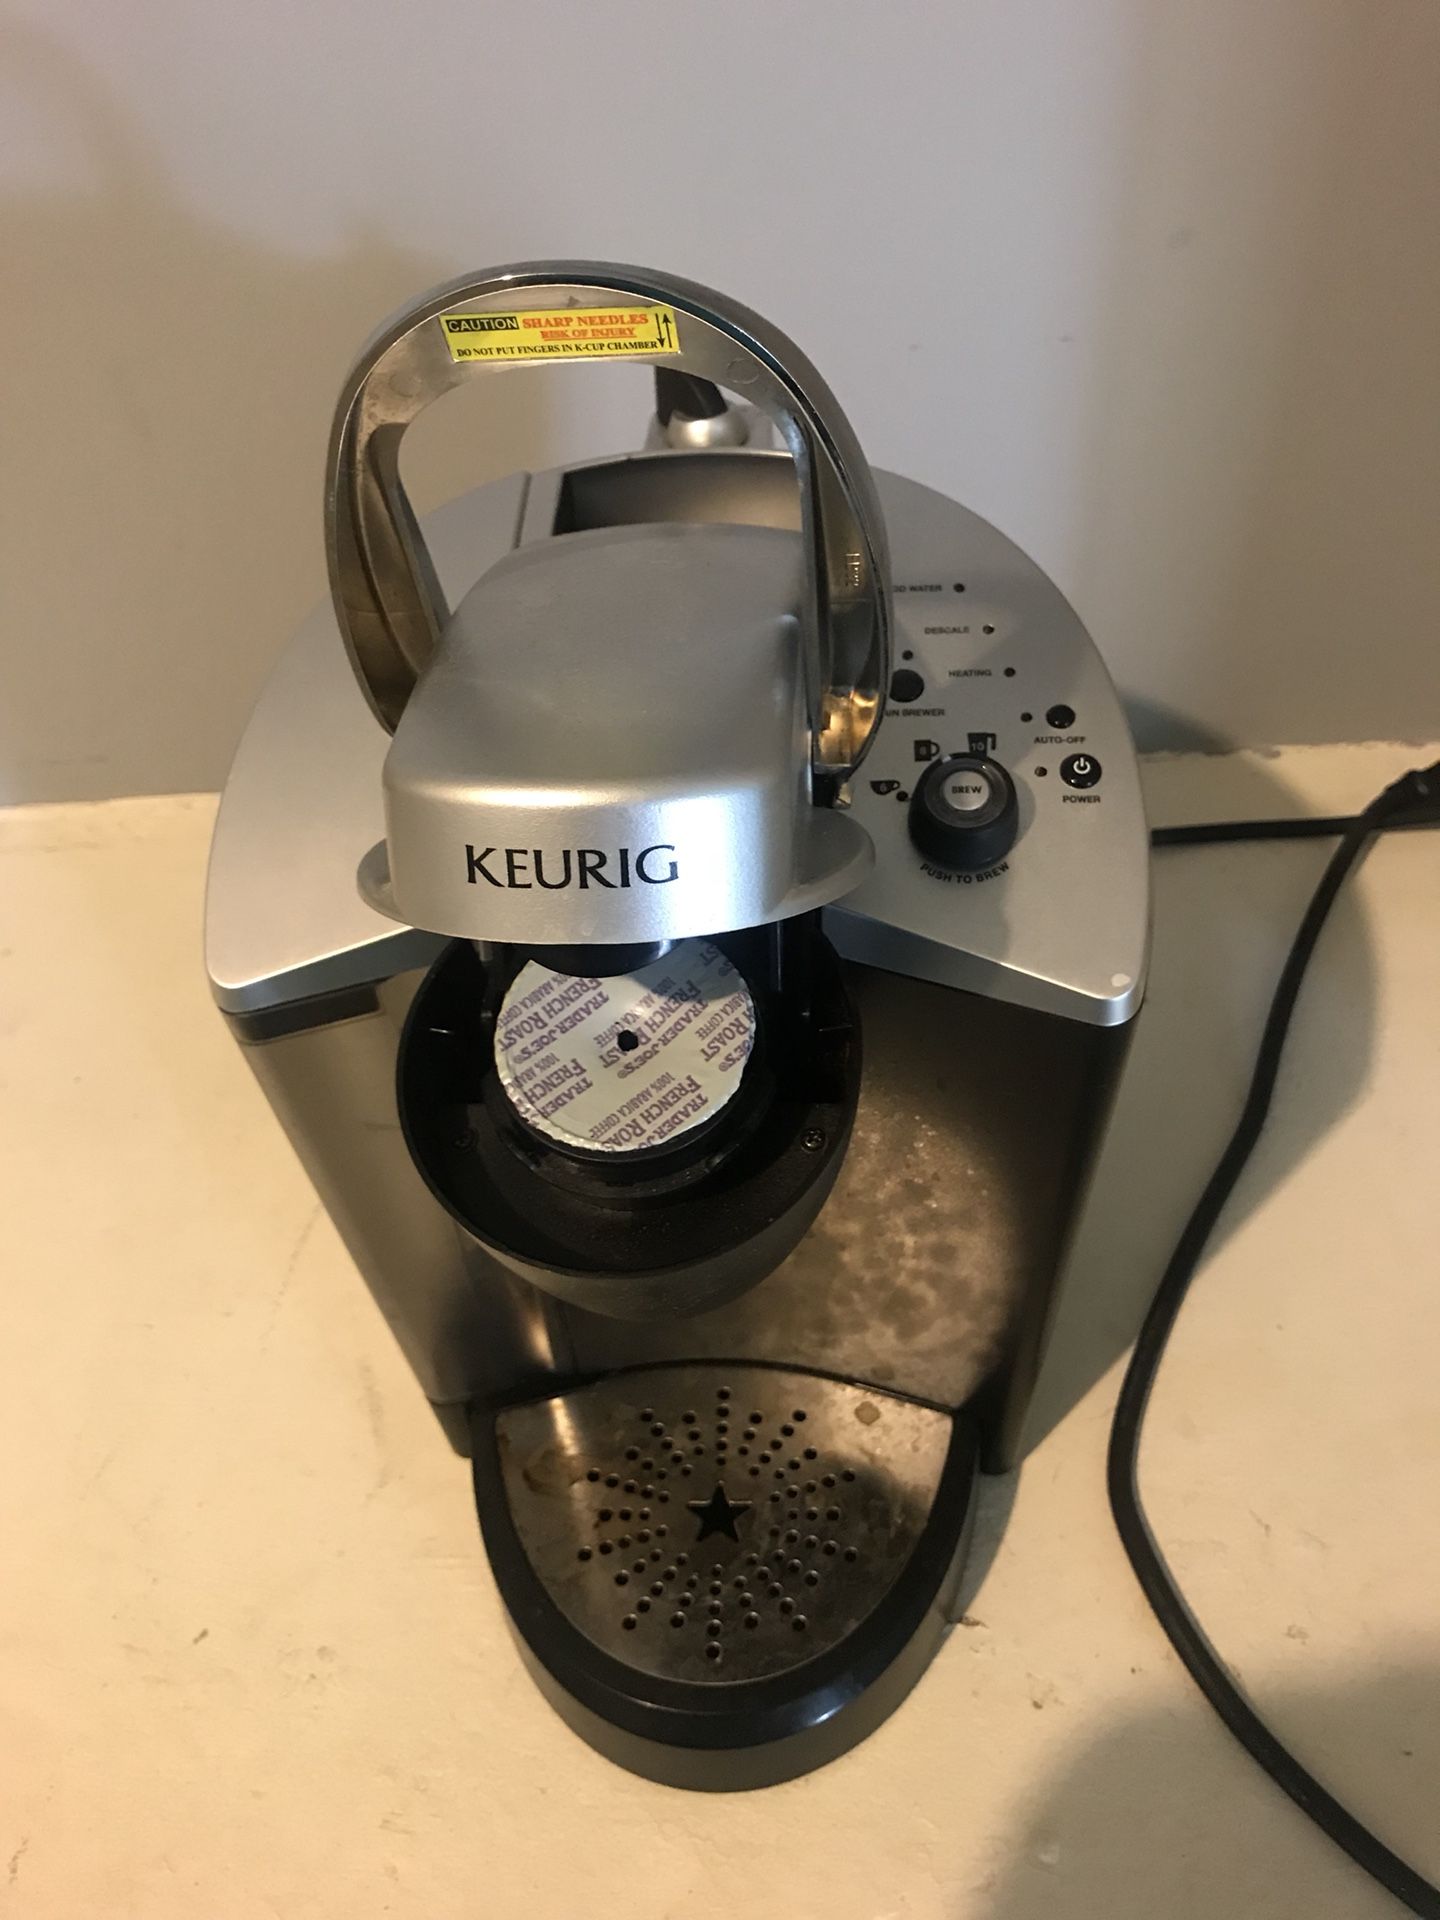 Keurig coffee machine for sale